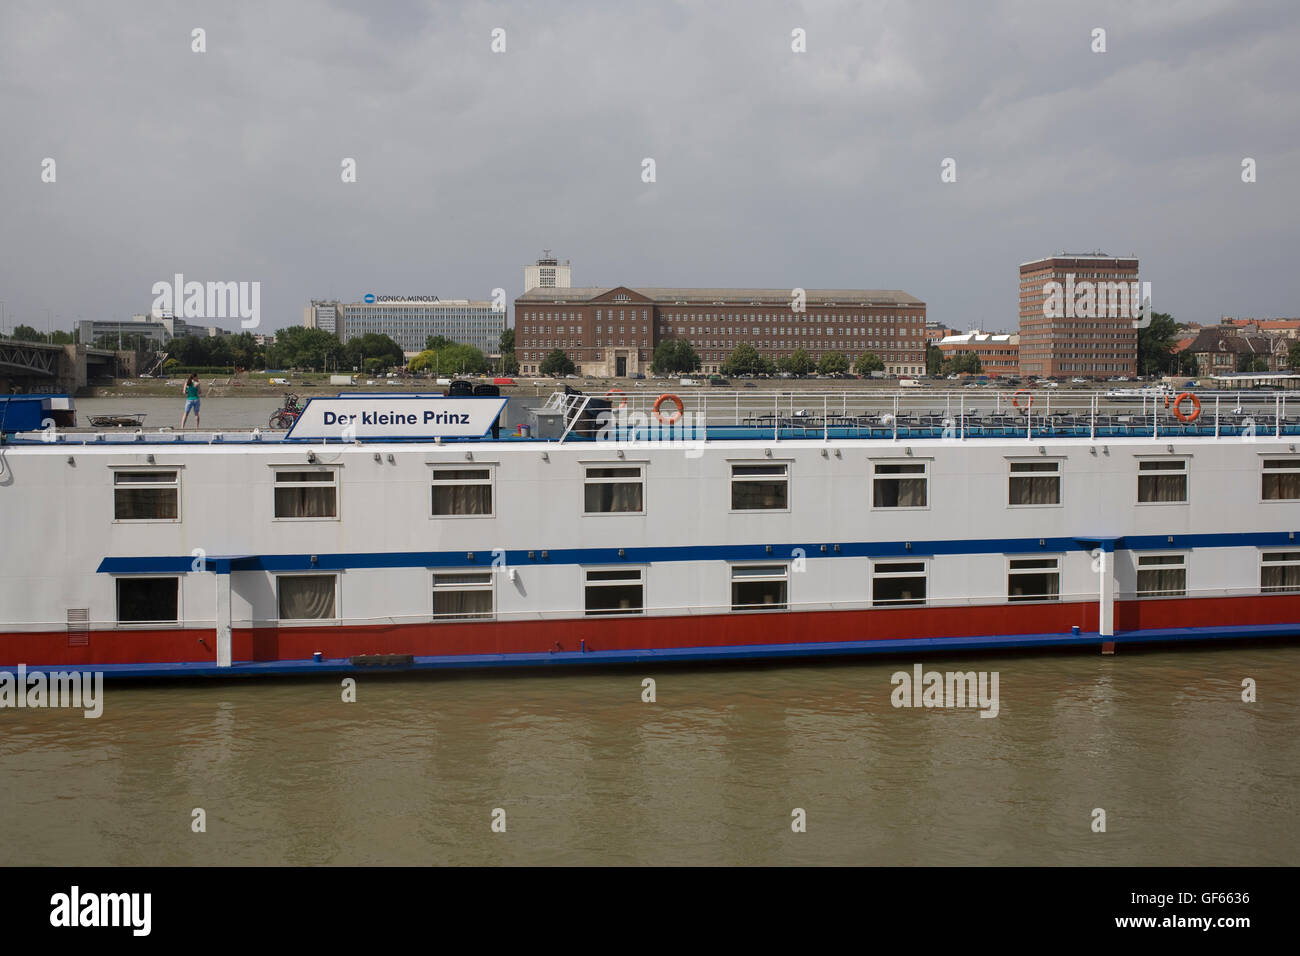 Der kleine Prinz German cruise boat with Konica Minolta office on Pest side of Danube beyond Stock Photo